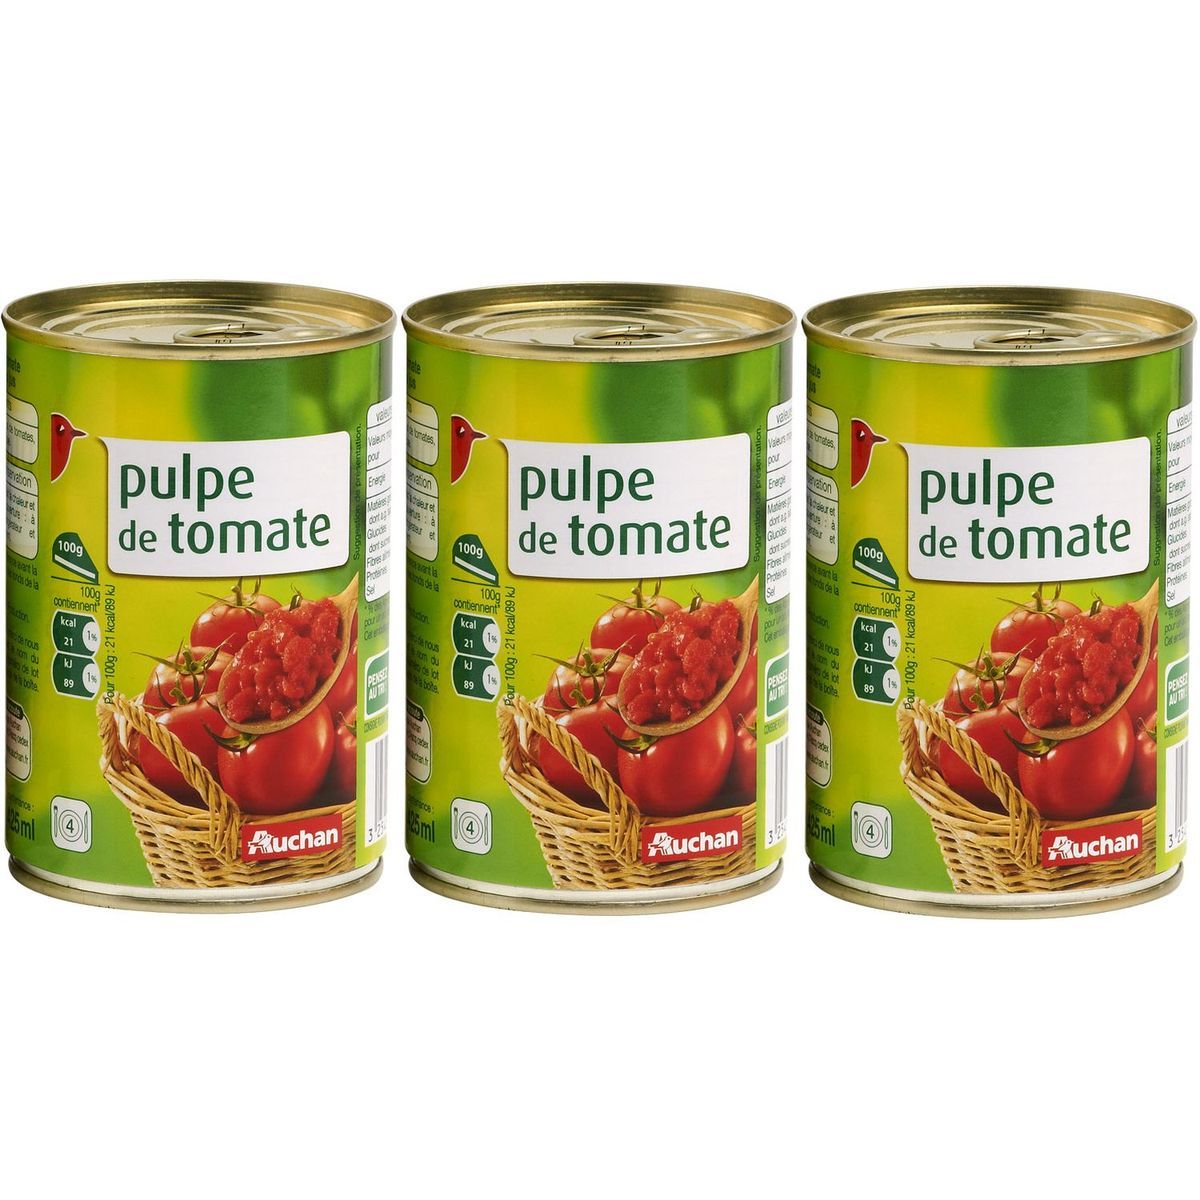 Pulpe des tomates boite Auchan